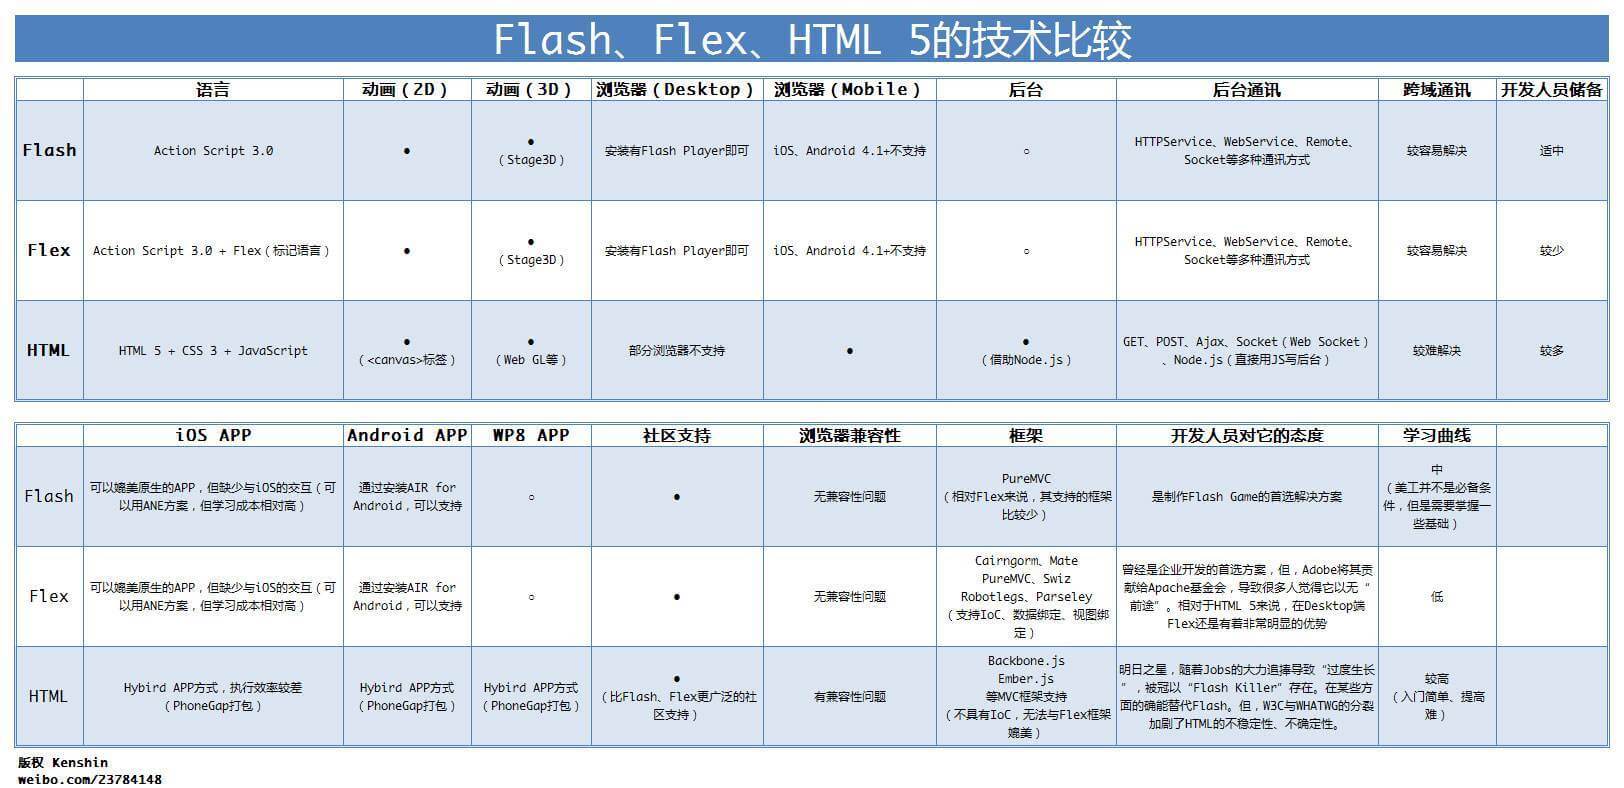 HTML5-VS.-Flash&Flex